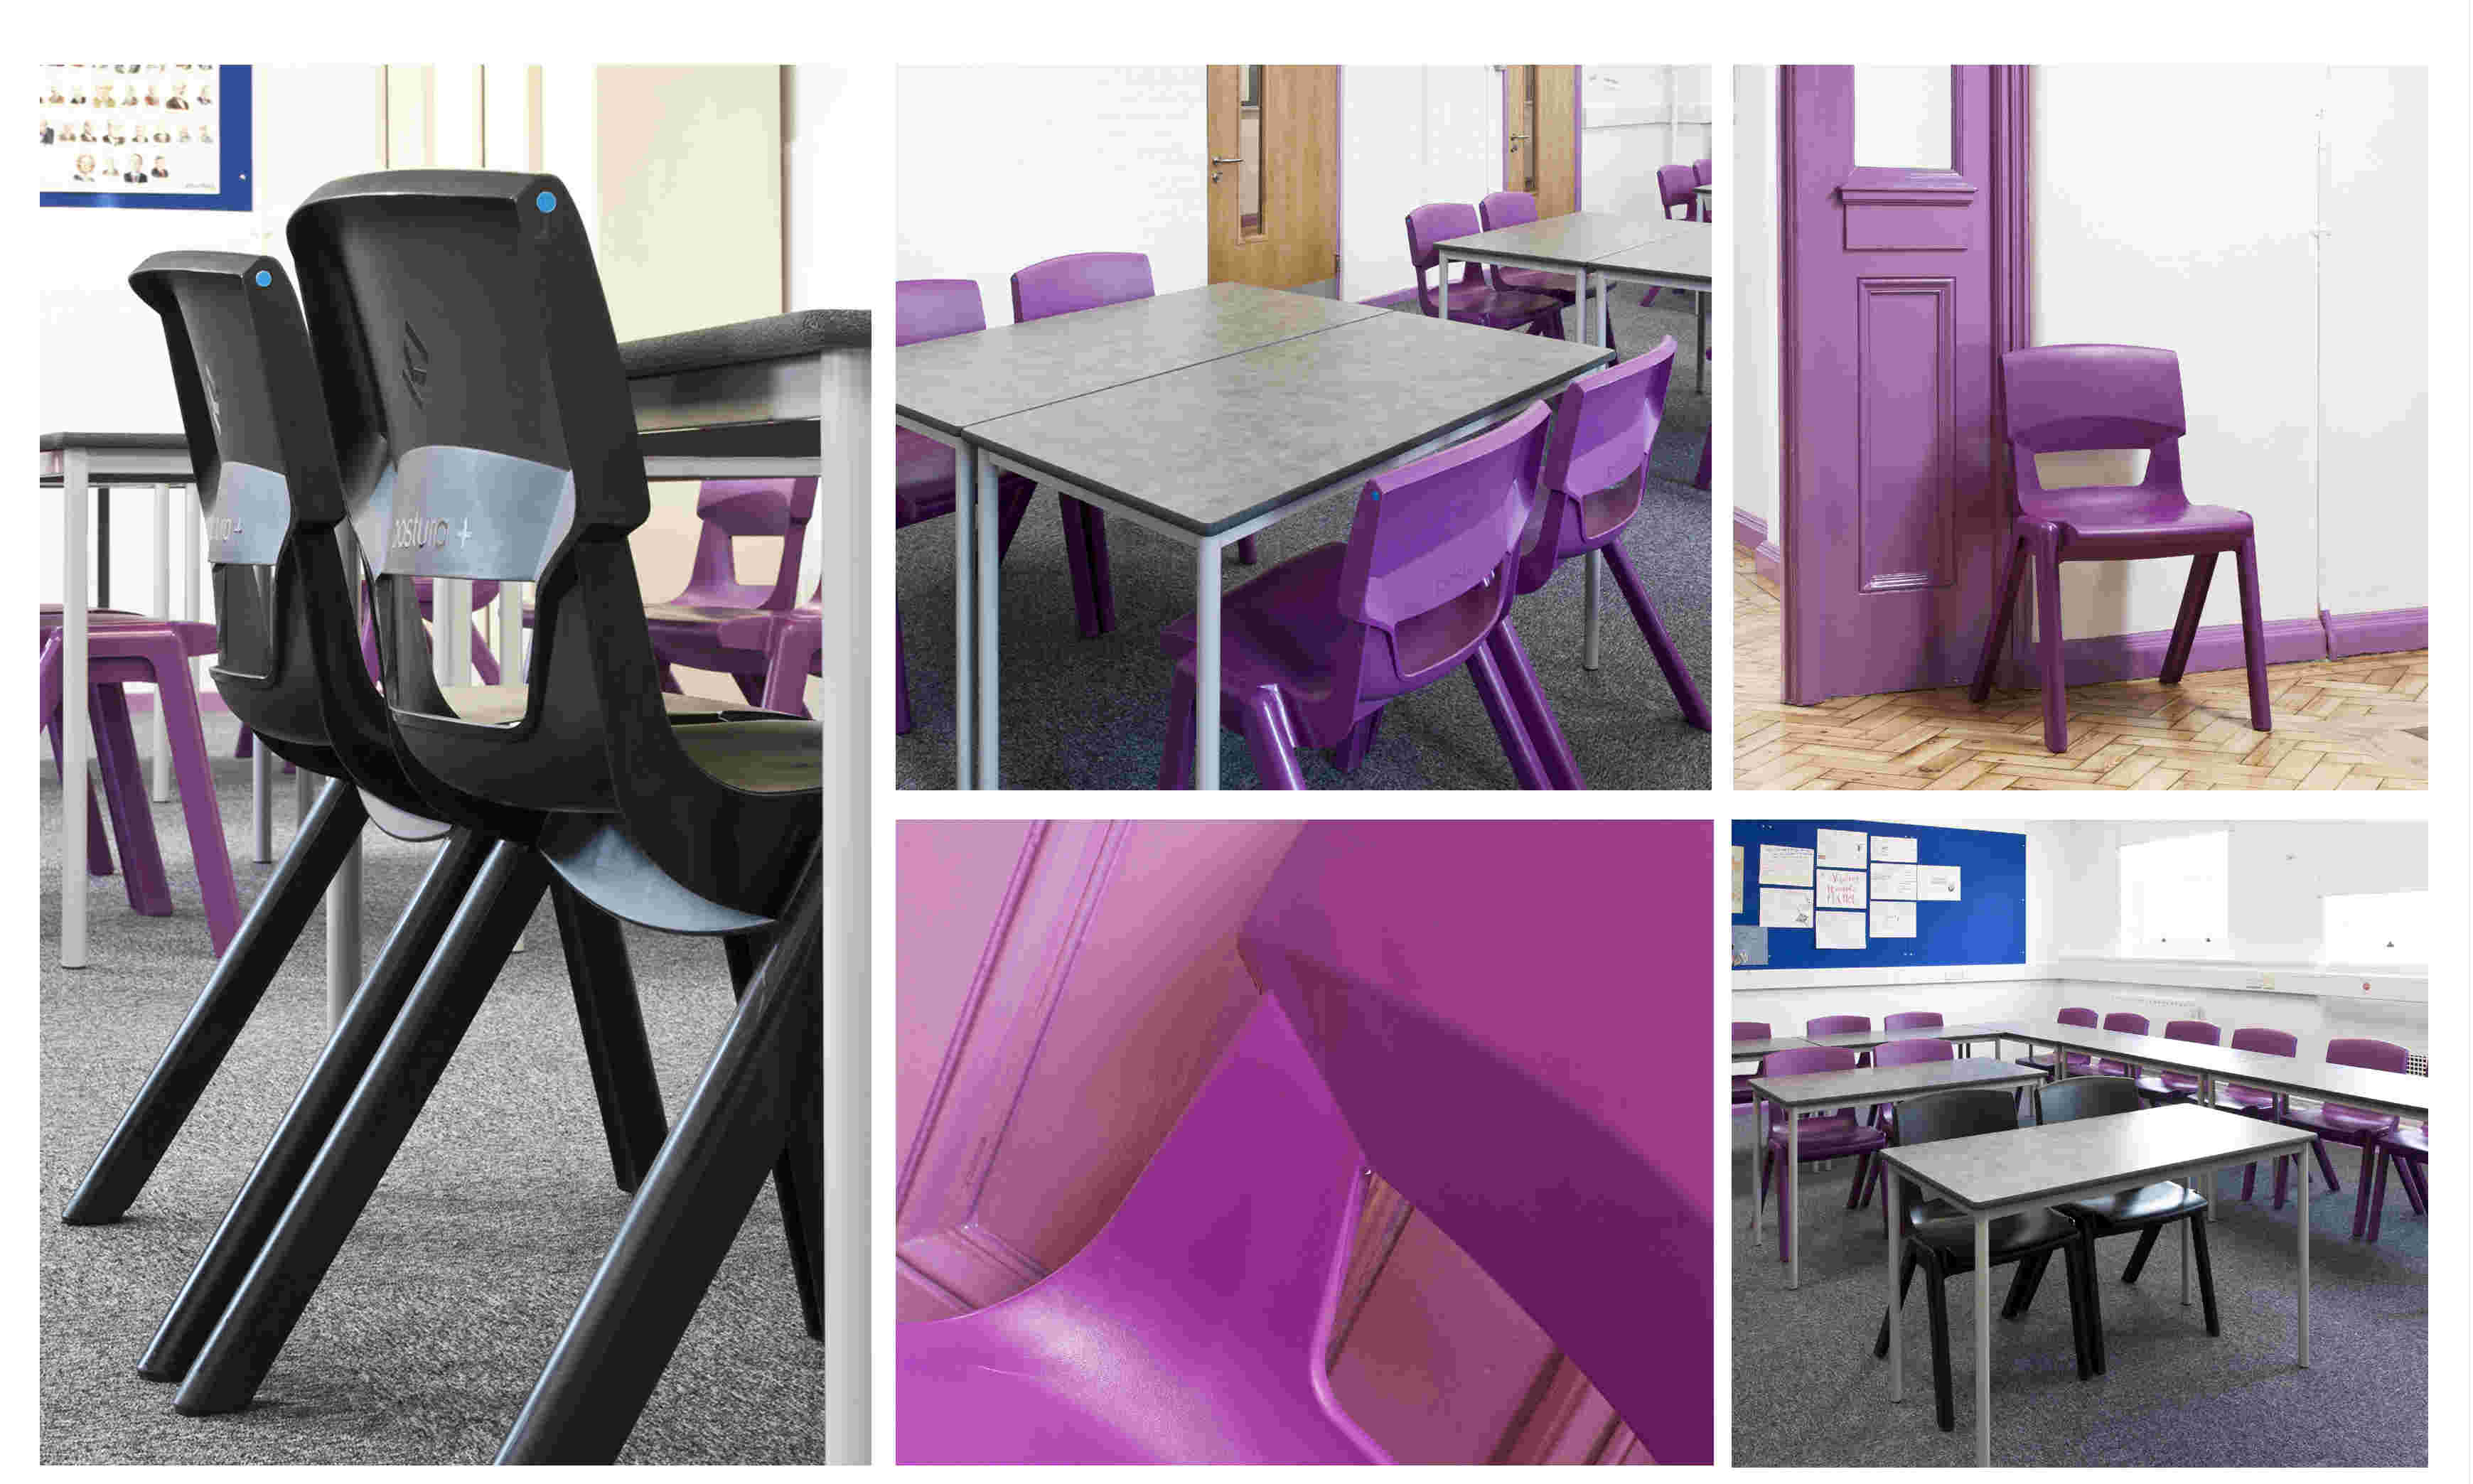 KI Postura+ chairs selected for New City College’s colour co-ordinated refurbishment